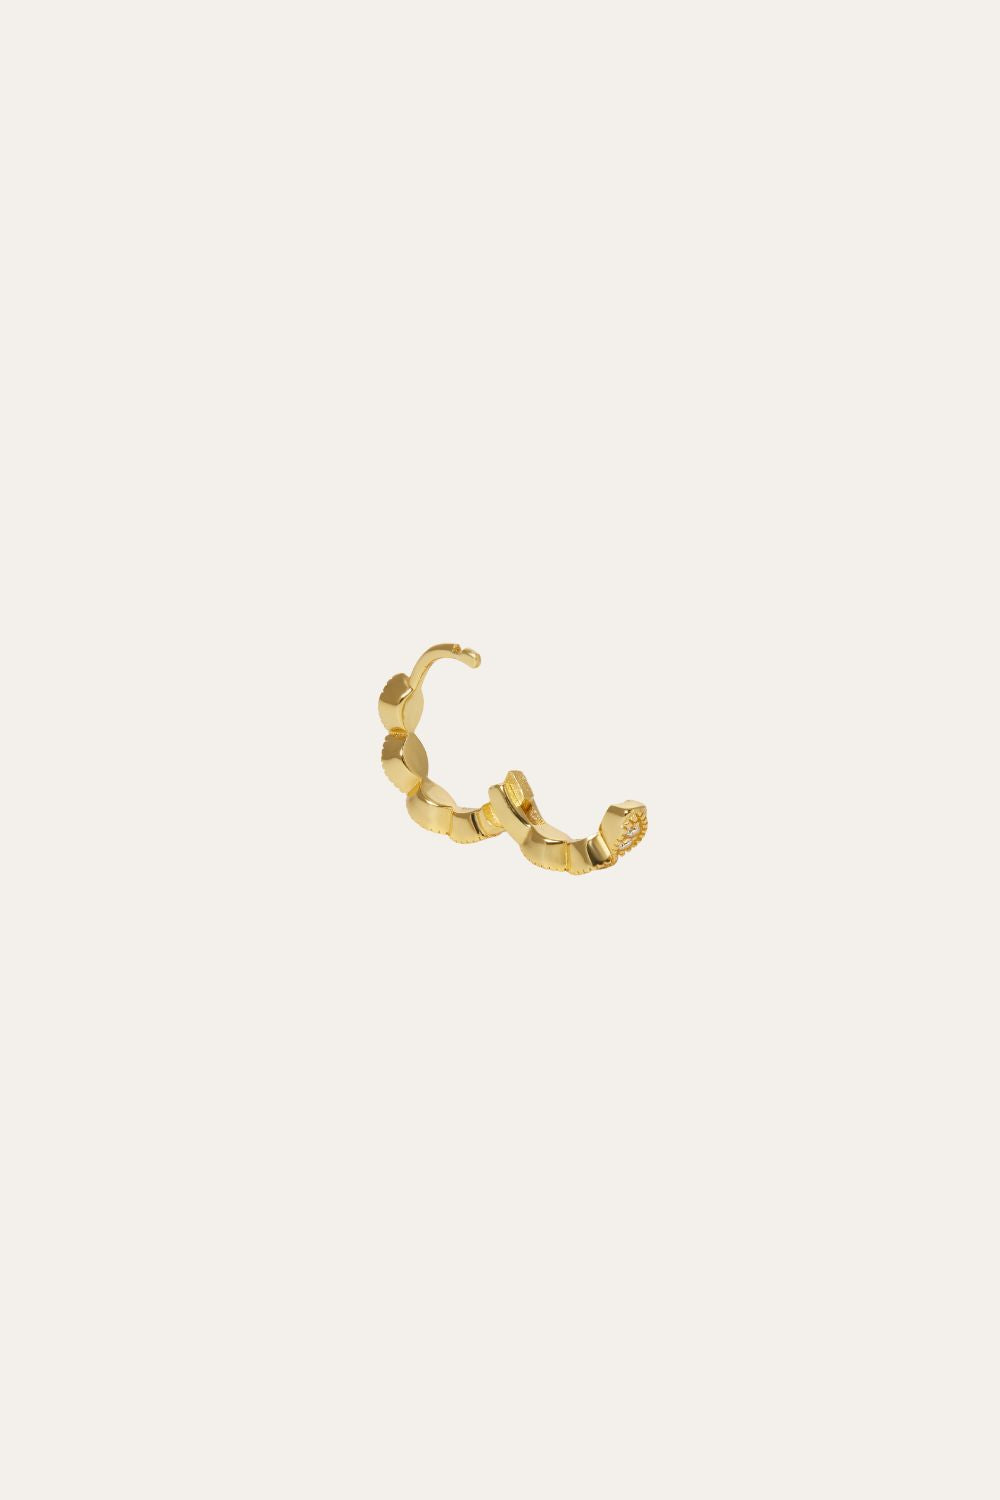 Tasha 8.5 mm gold vermeil huggie